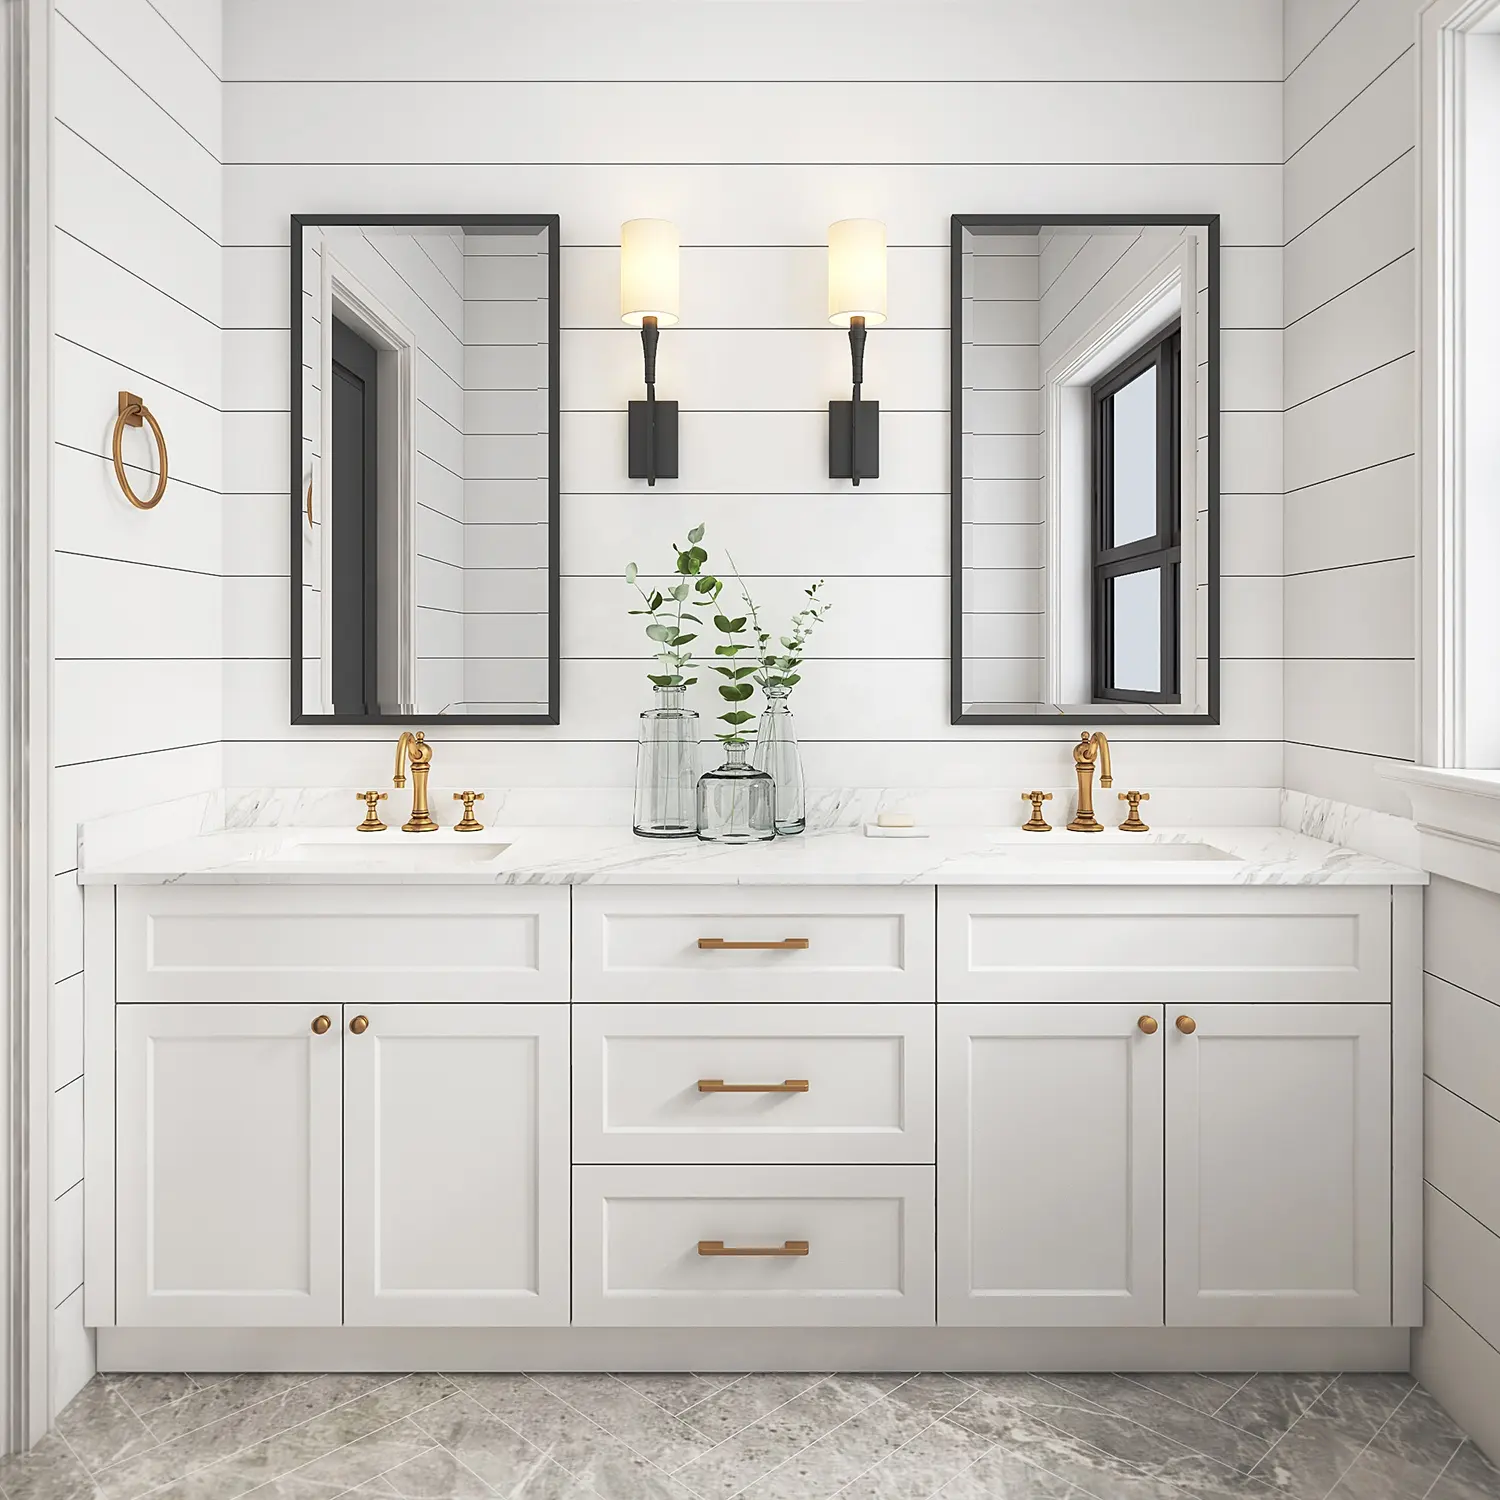 PA furniture luxury double basin vanity sink PVC storage bathroom cabinet